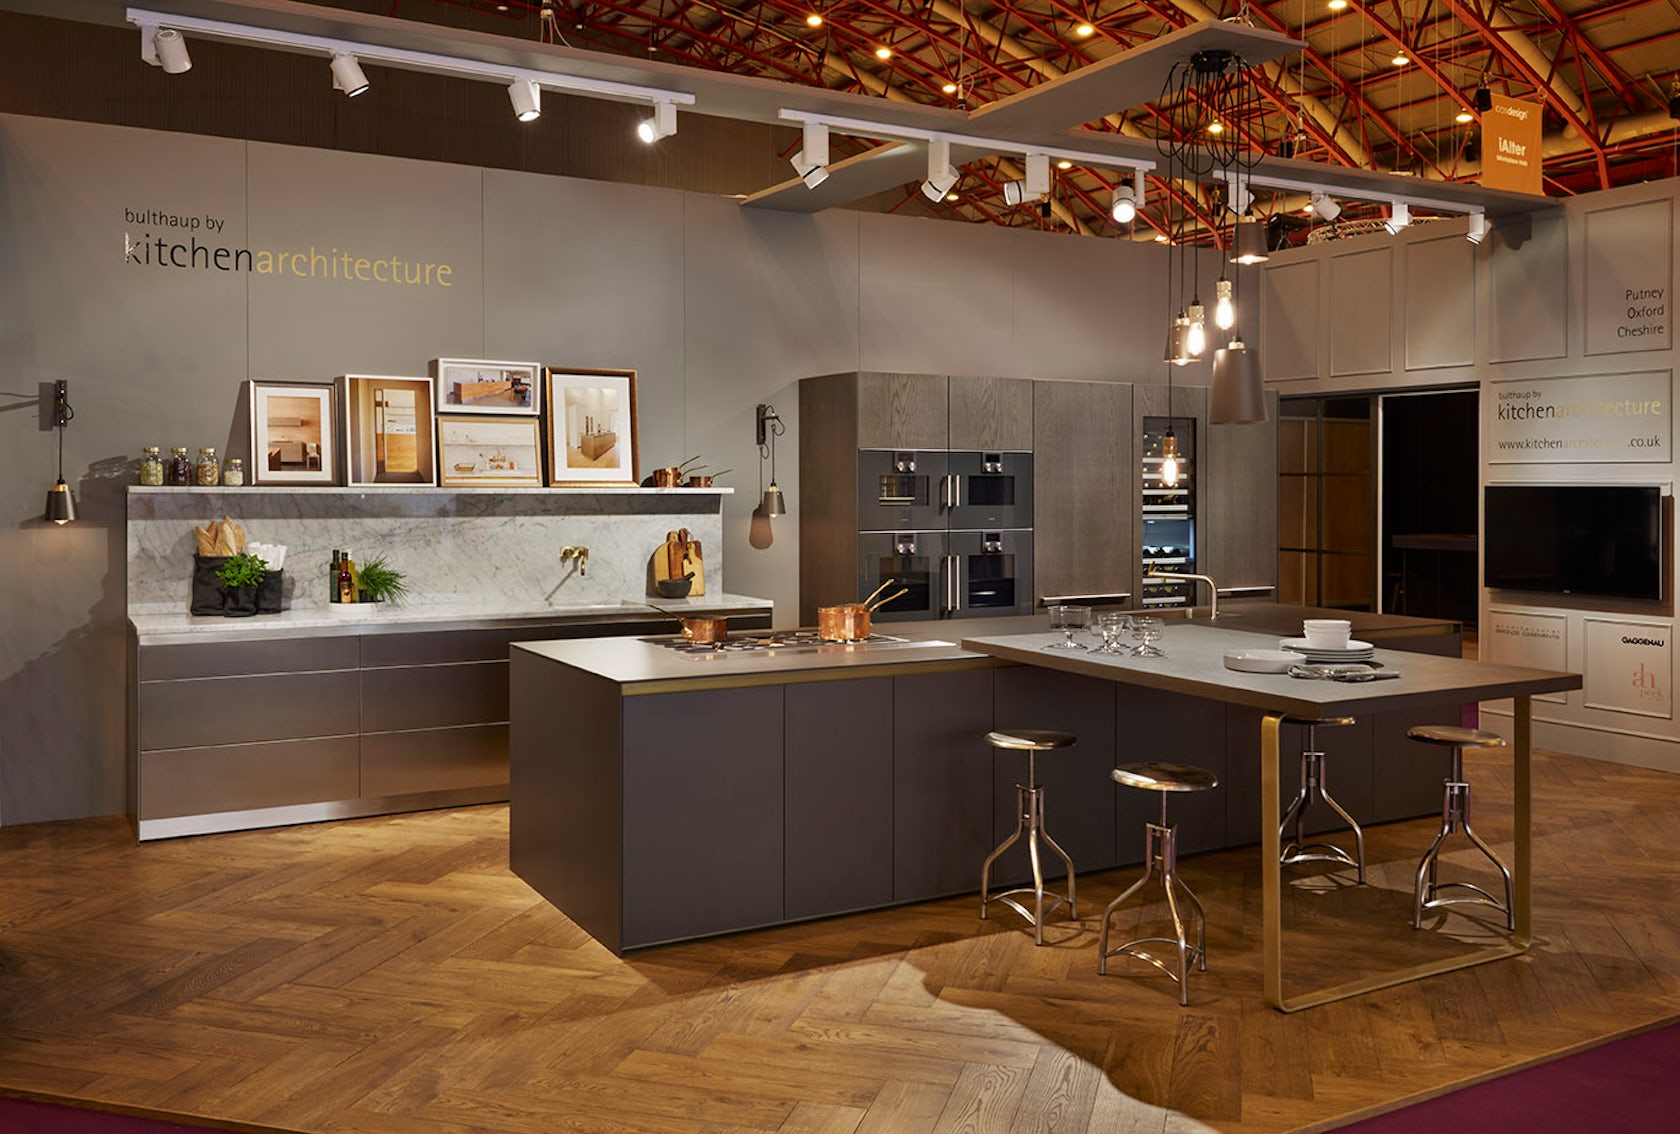 100% Design 2014: Kitchen Architecture's bulthaup b3 stand - Architizer